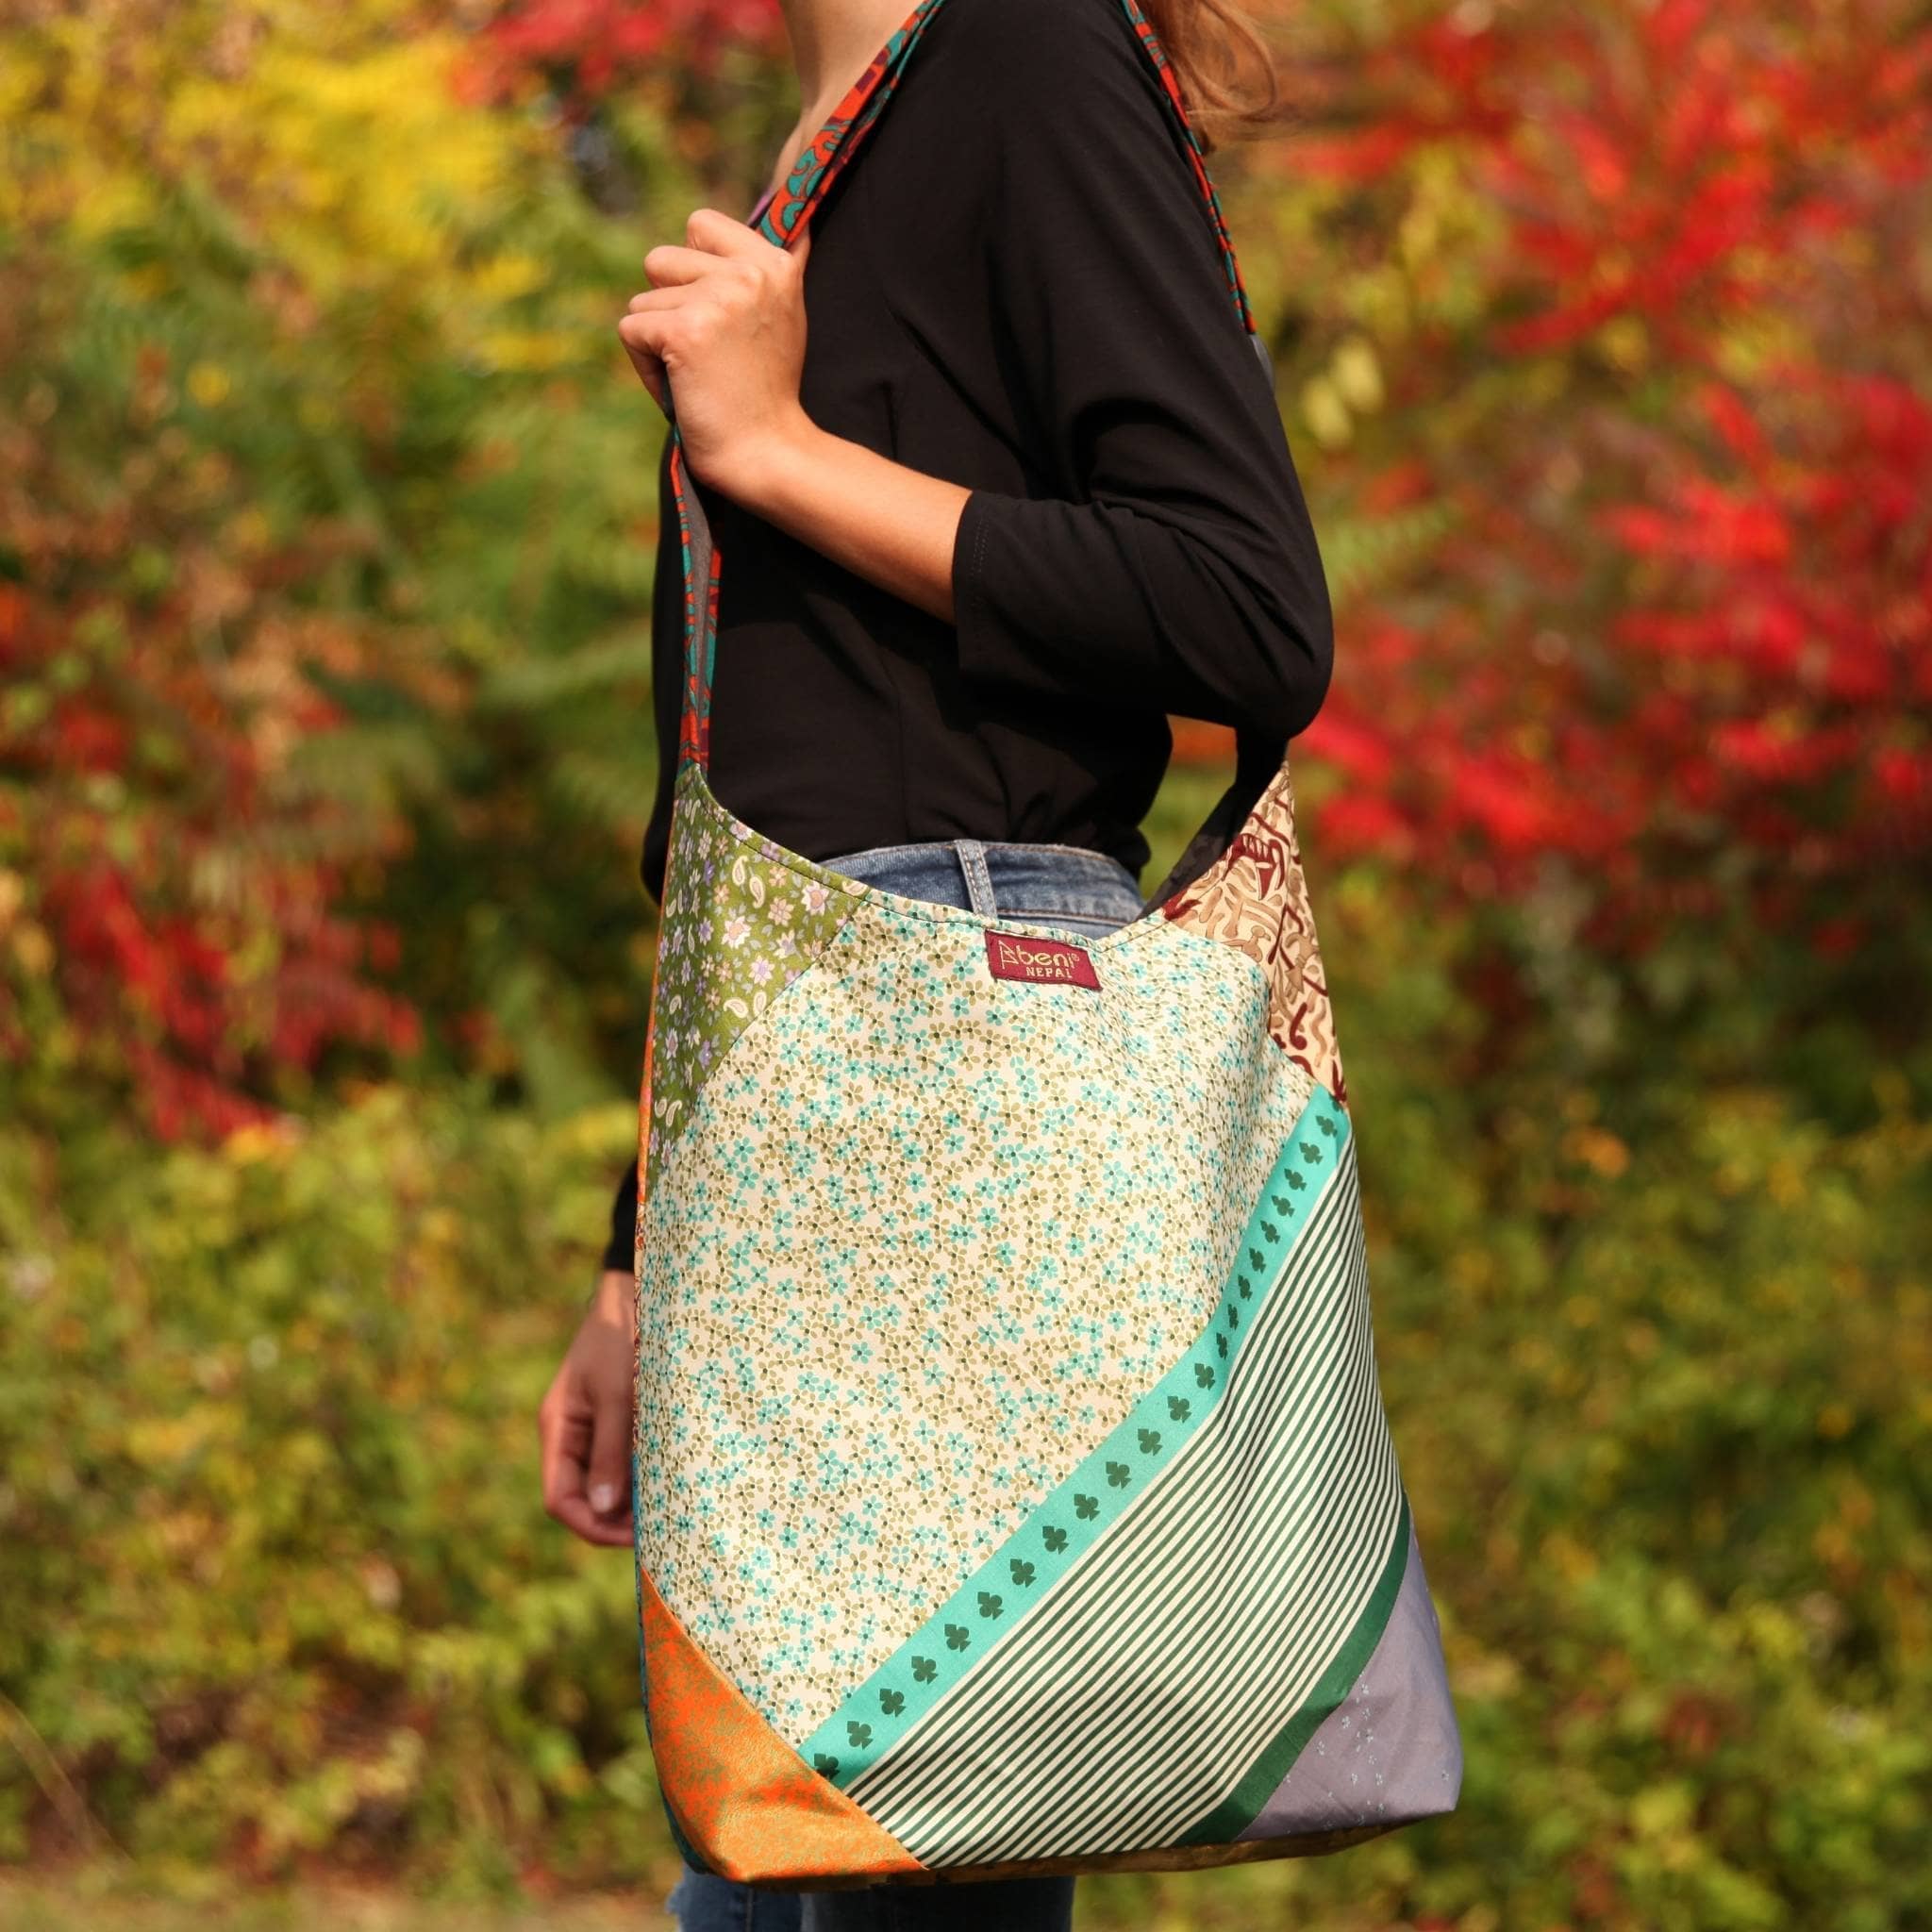 I IHAYNER Womens Leather Handbags Purse Top-handle Bags India | Ubuy